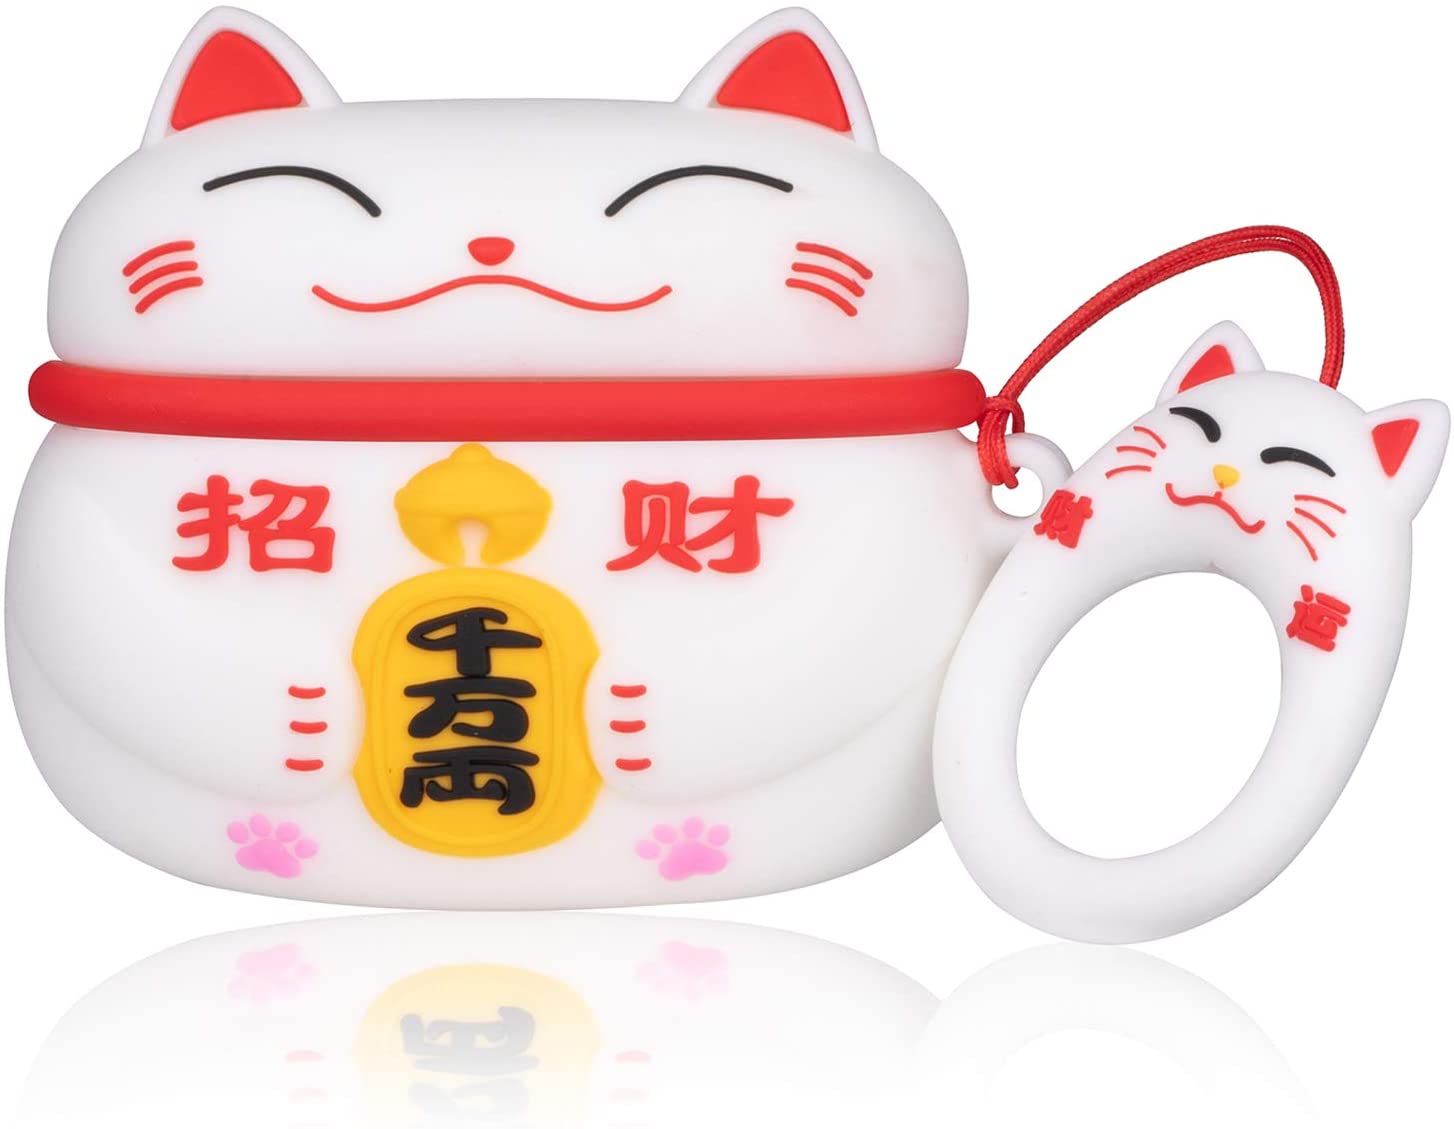 White Maneki-neko Lucky Cat Airpods Case